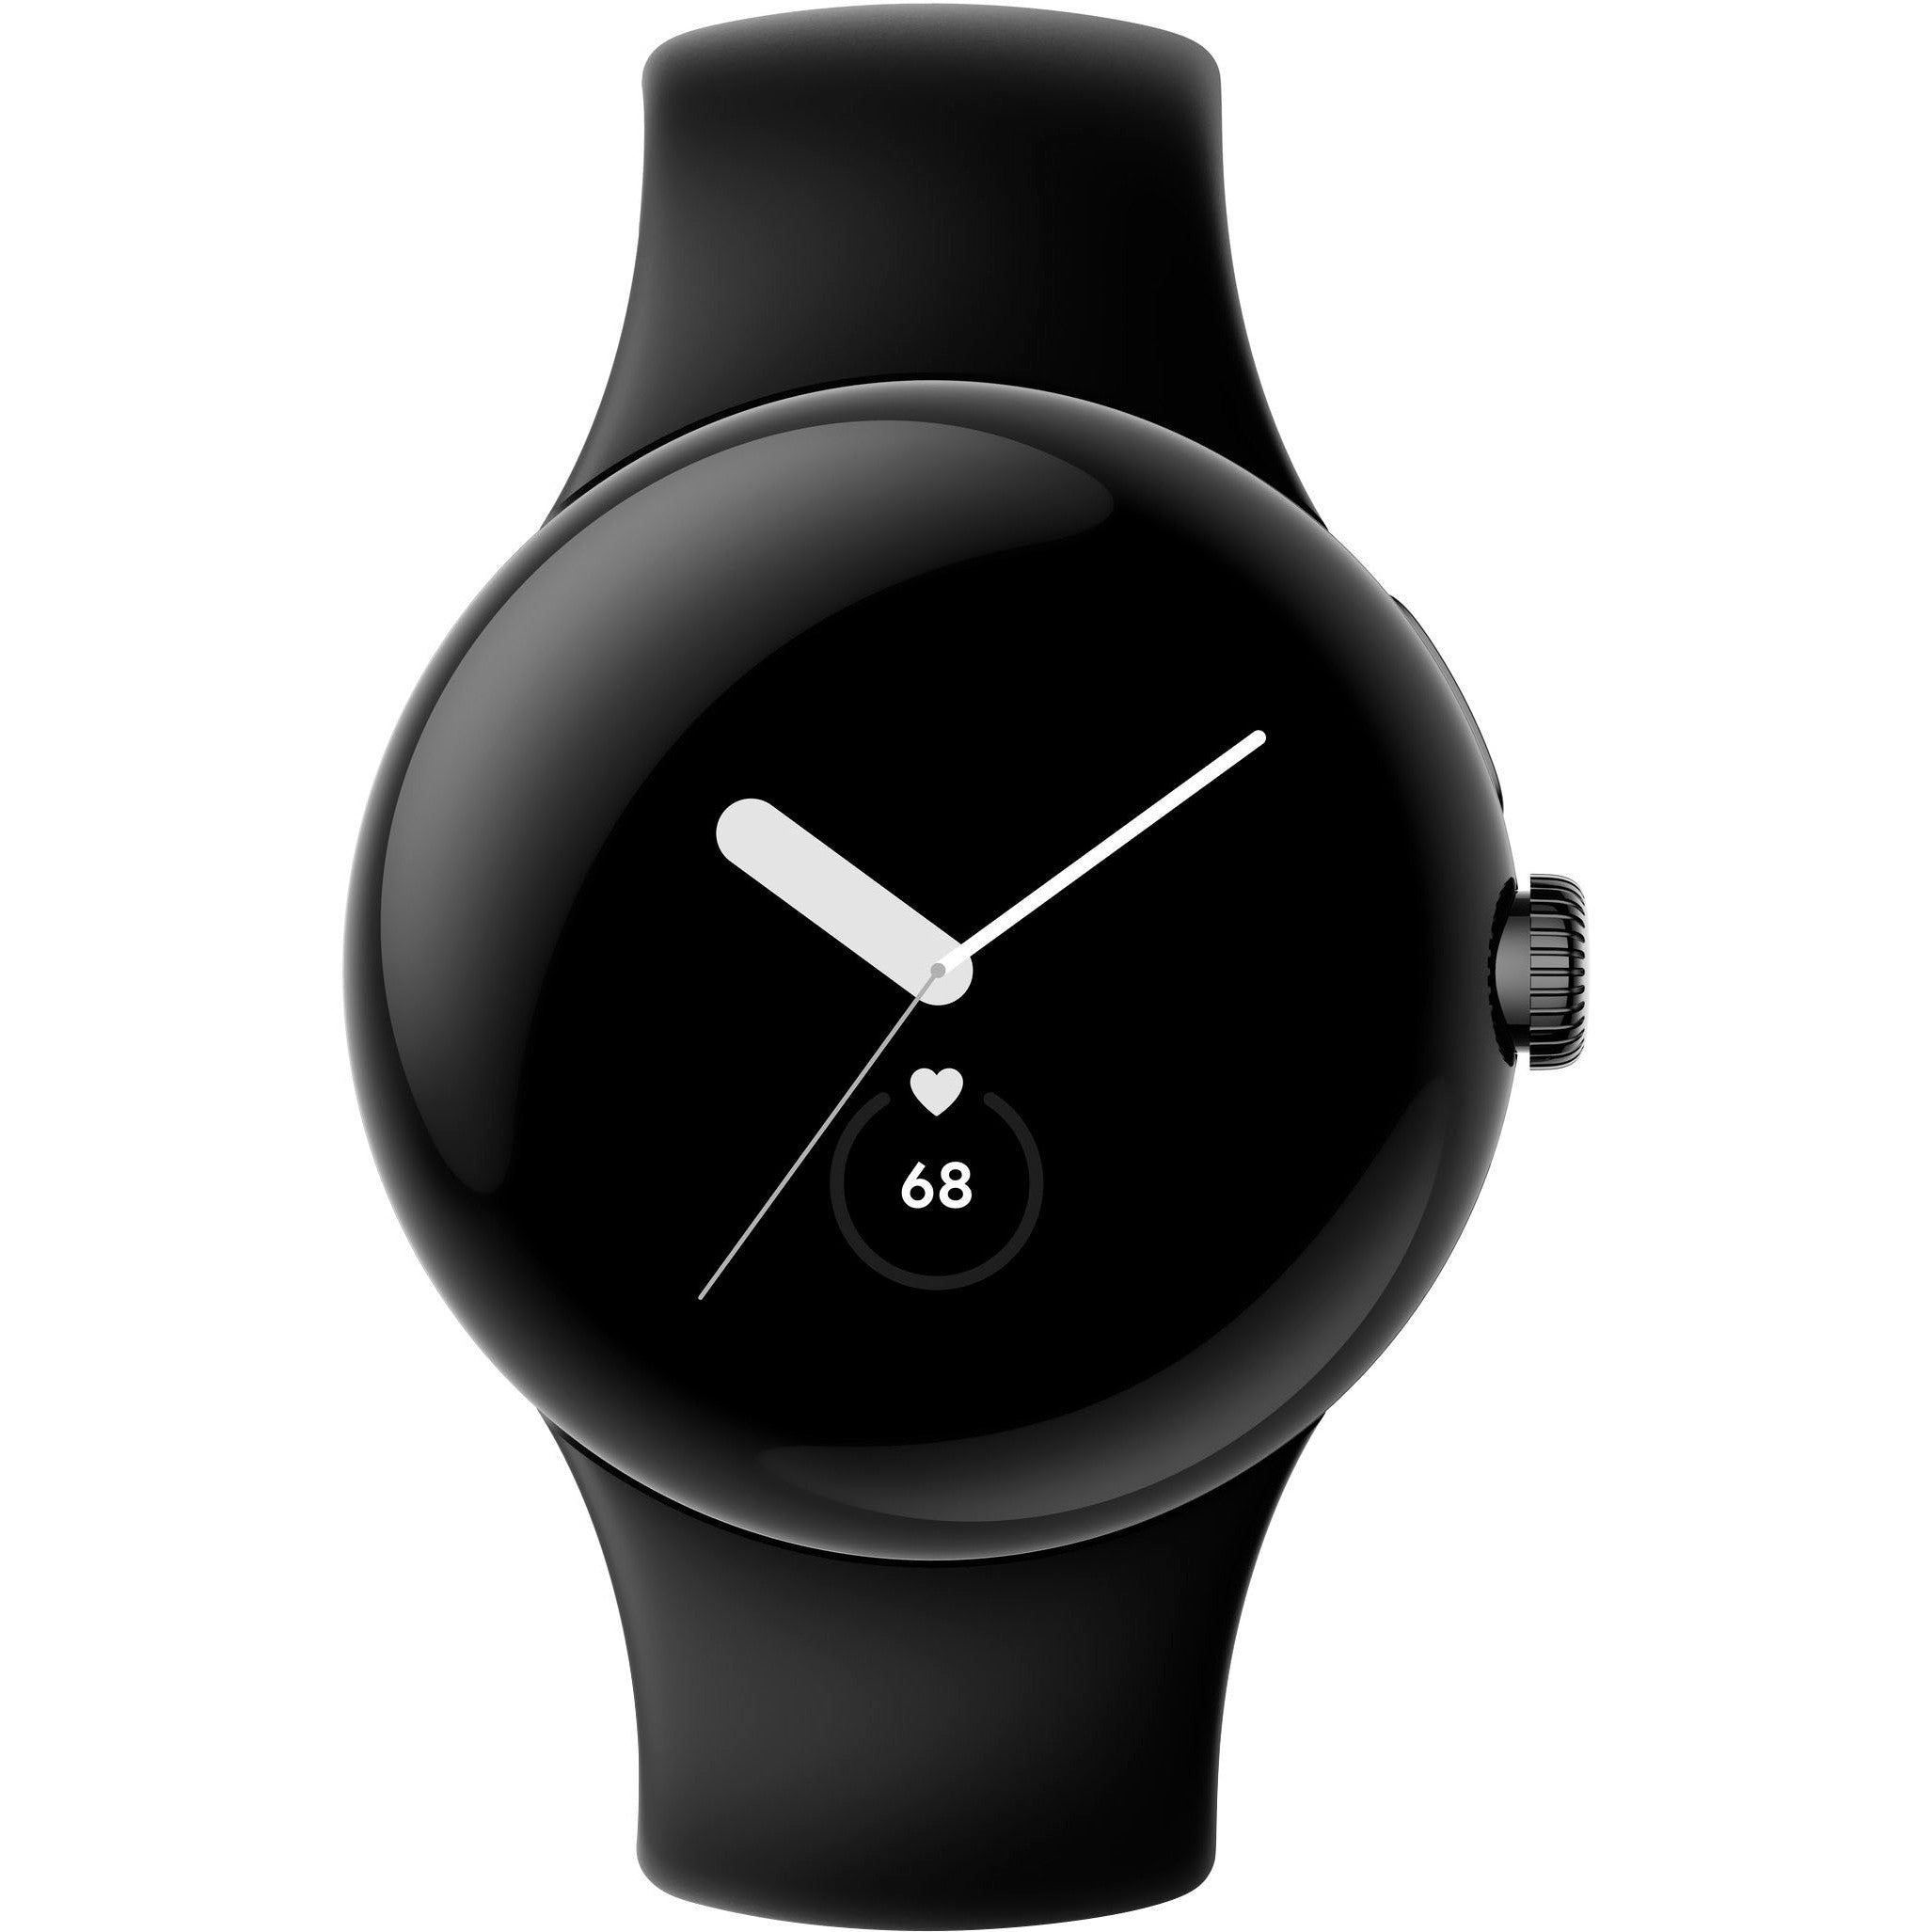 Google GA03119 Pixel Watch with Google Assistant - Black - Pristine